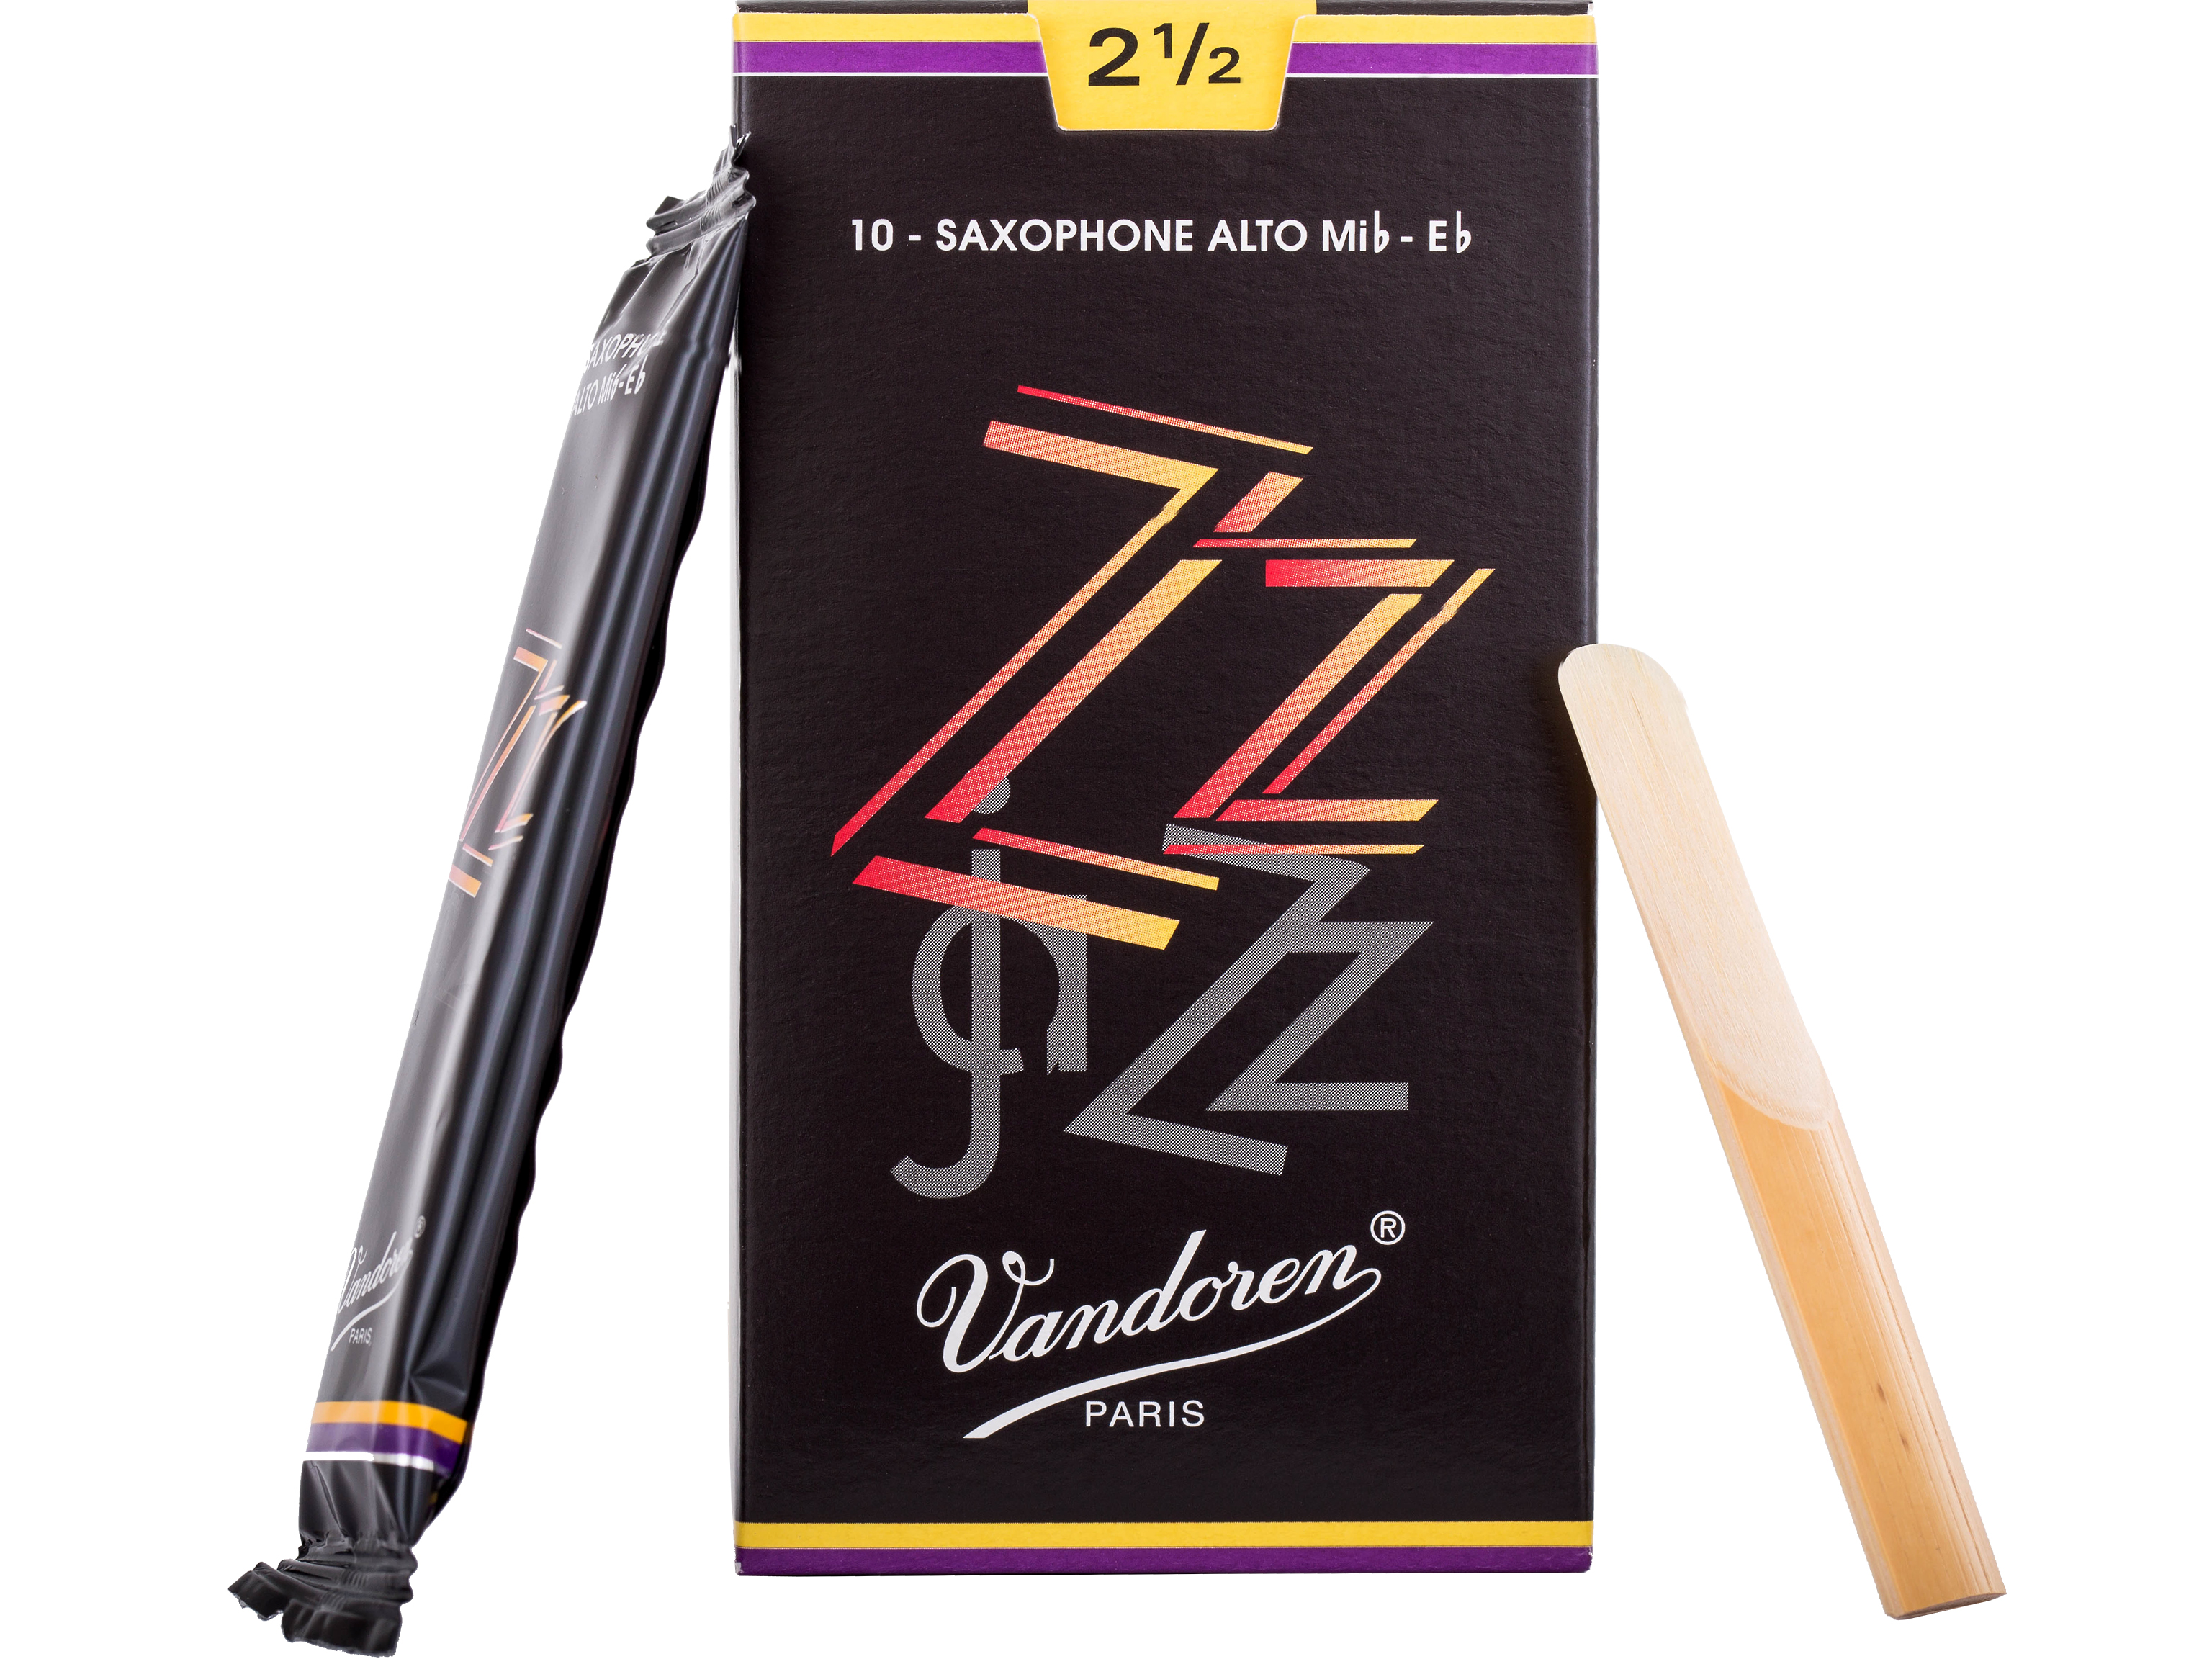 Vandoren Saxophonblatt ZZ Alt 2,5